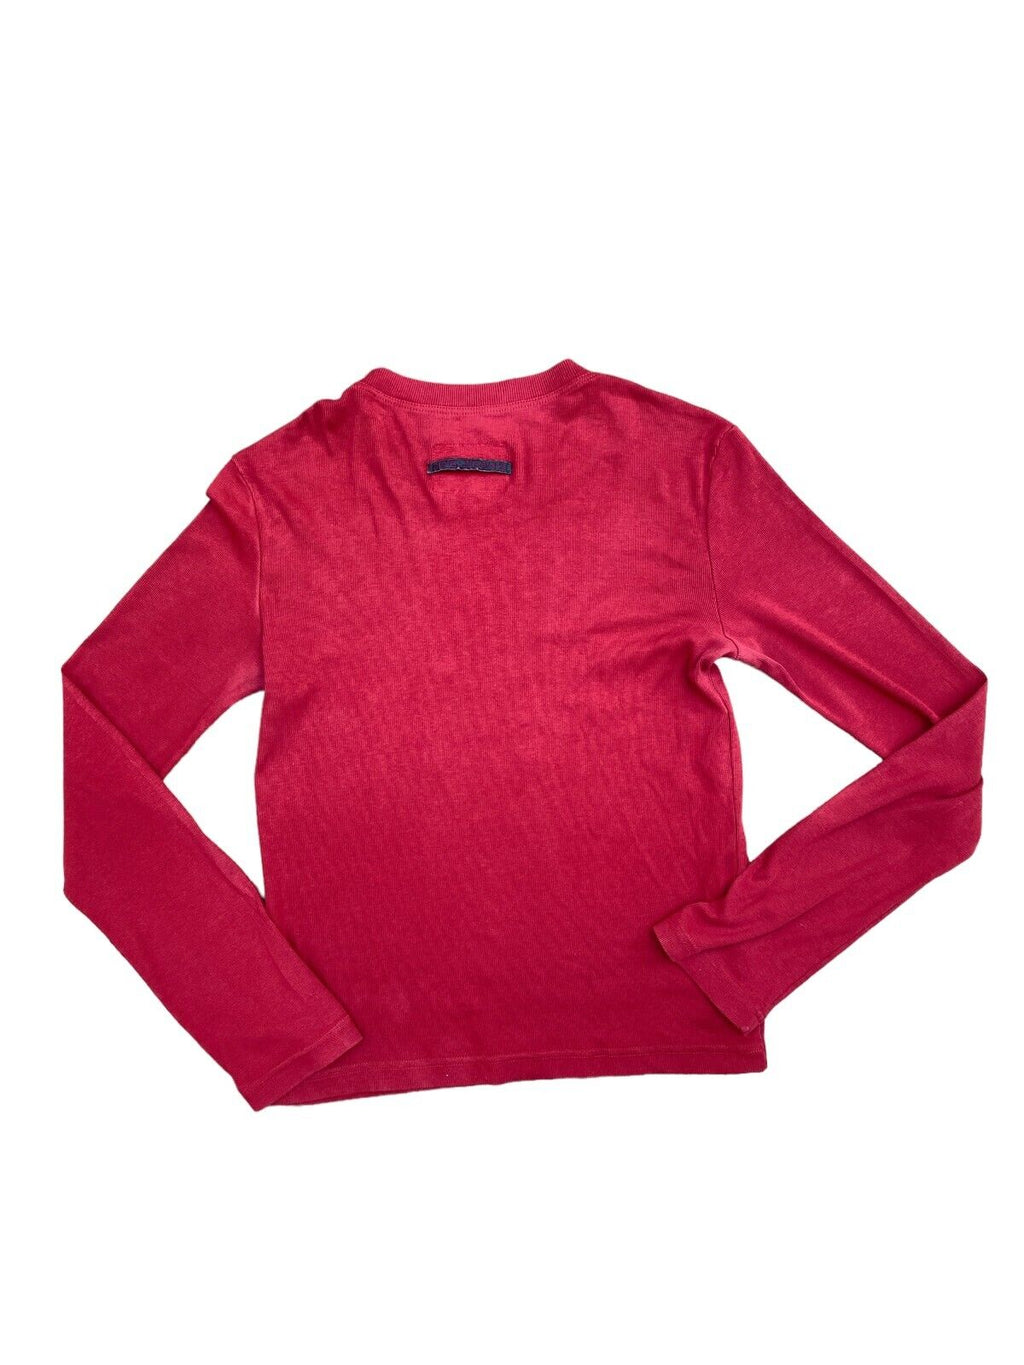 Vintage JPG logo Knitted Longsleeves  Red  Size M